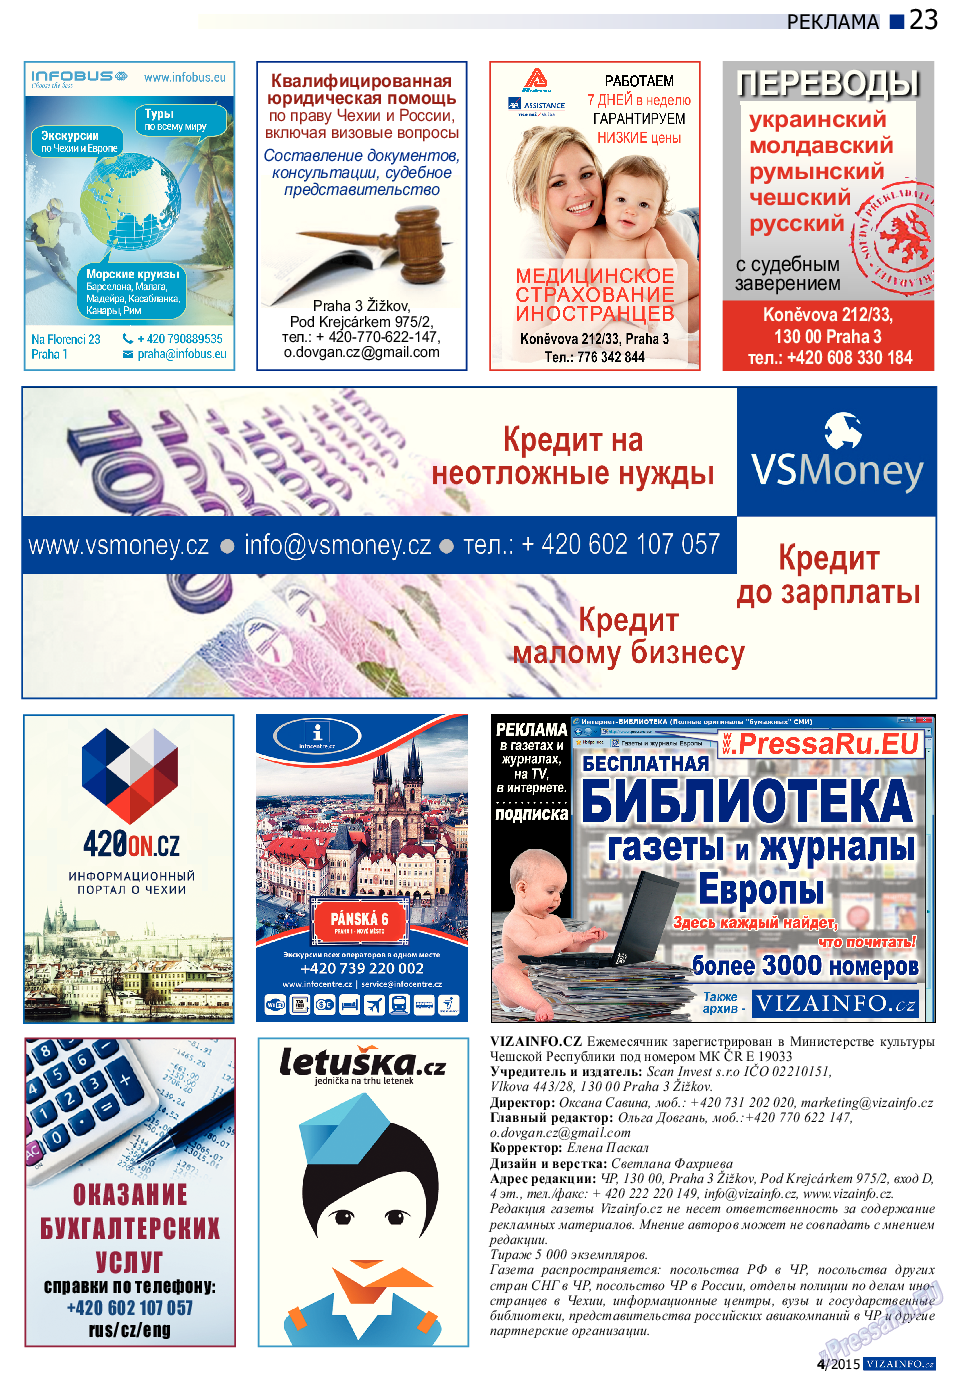 Vizainfo.cz, газета. 2015 №67 стр.23